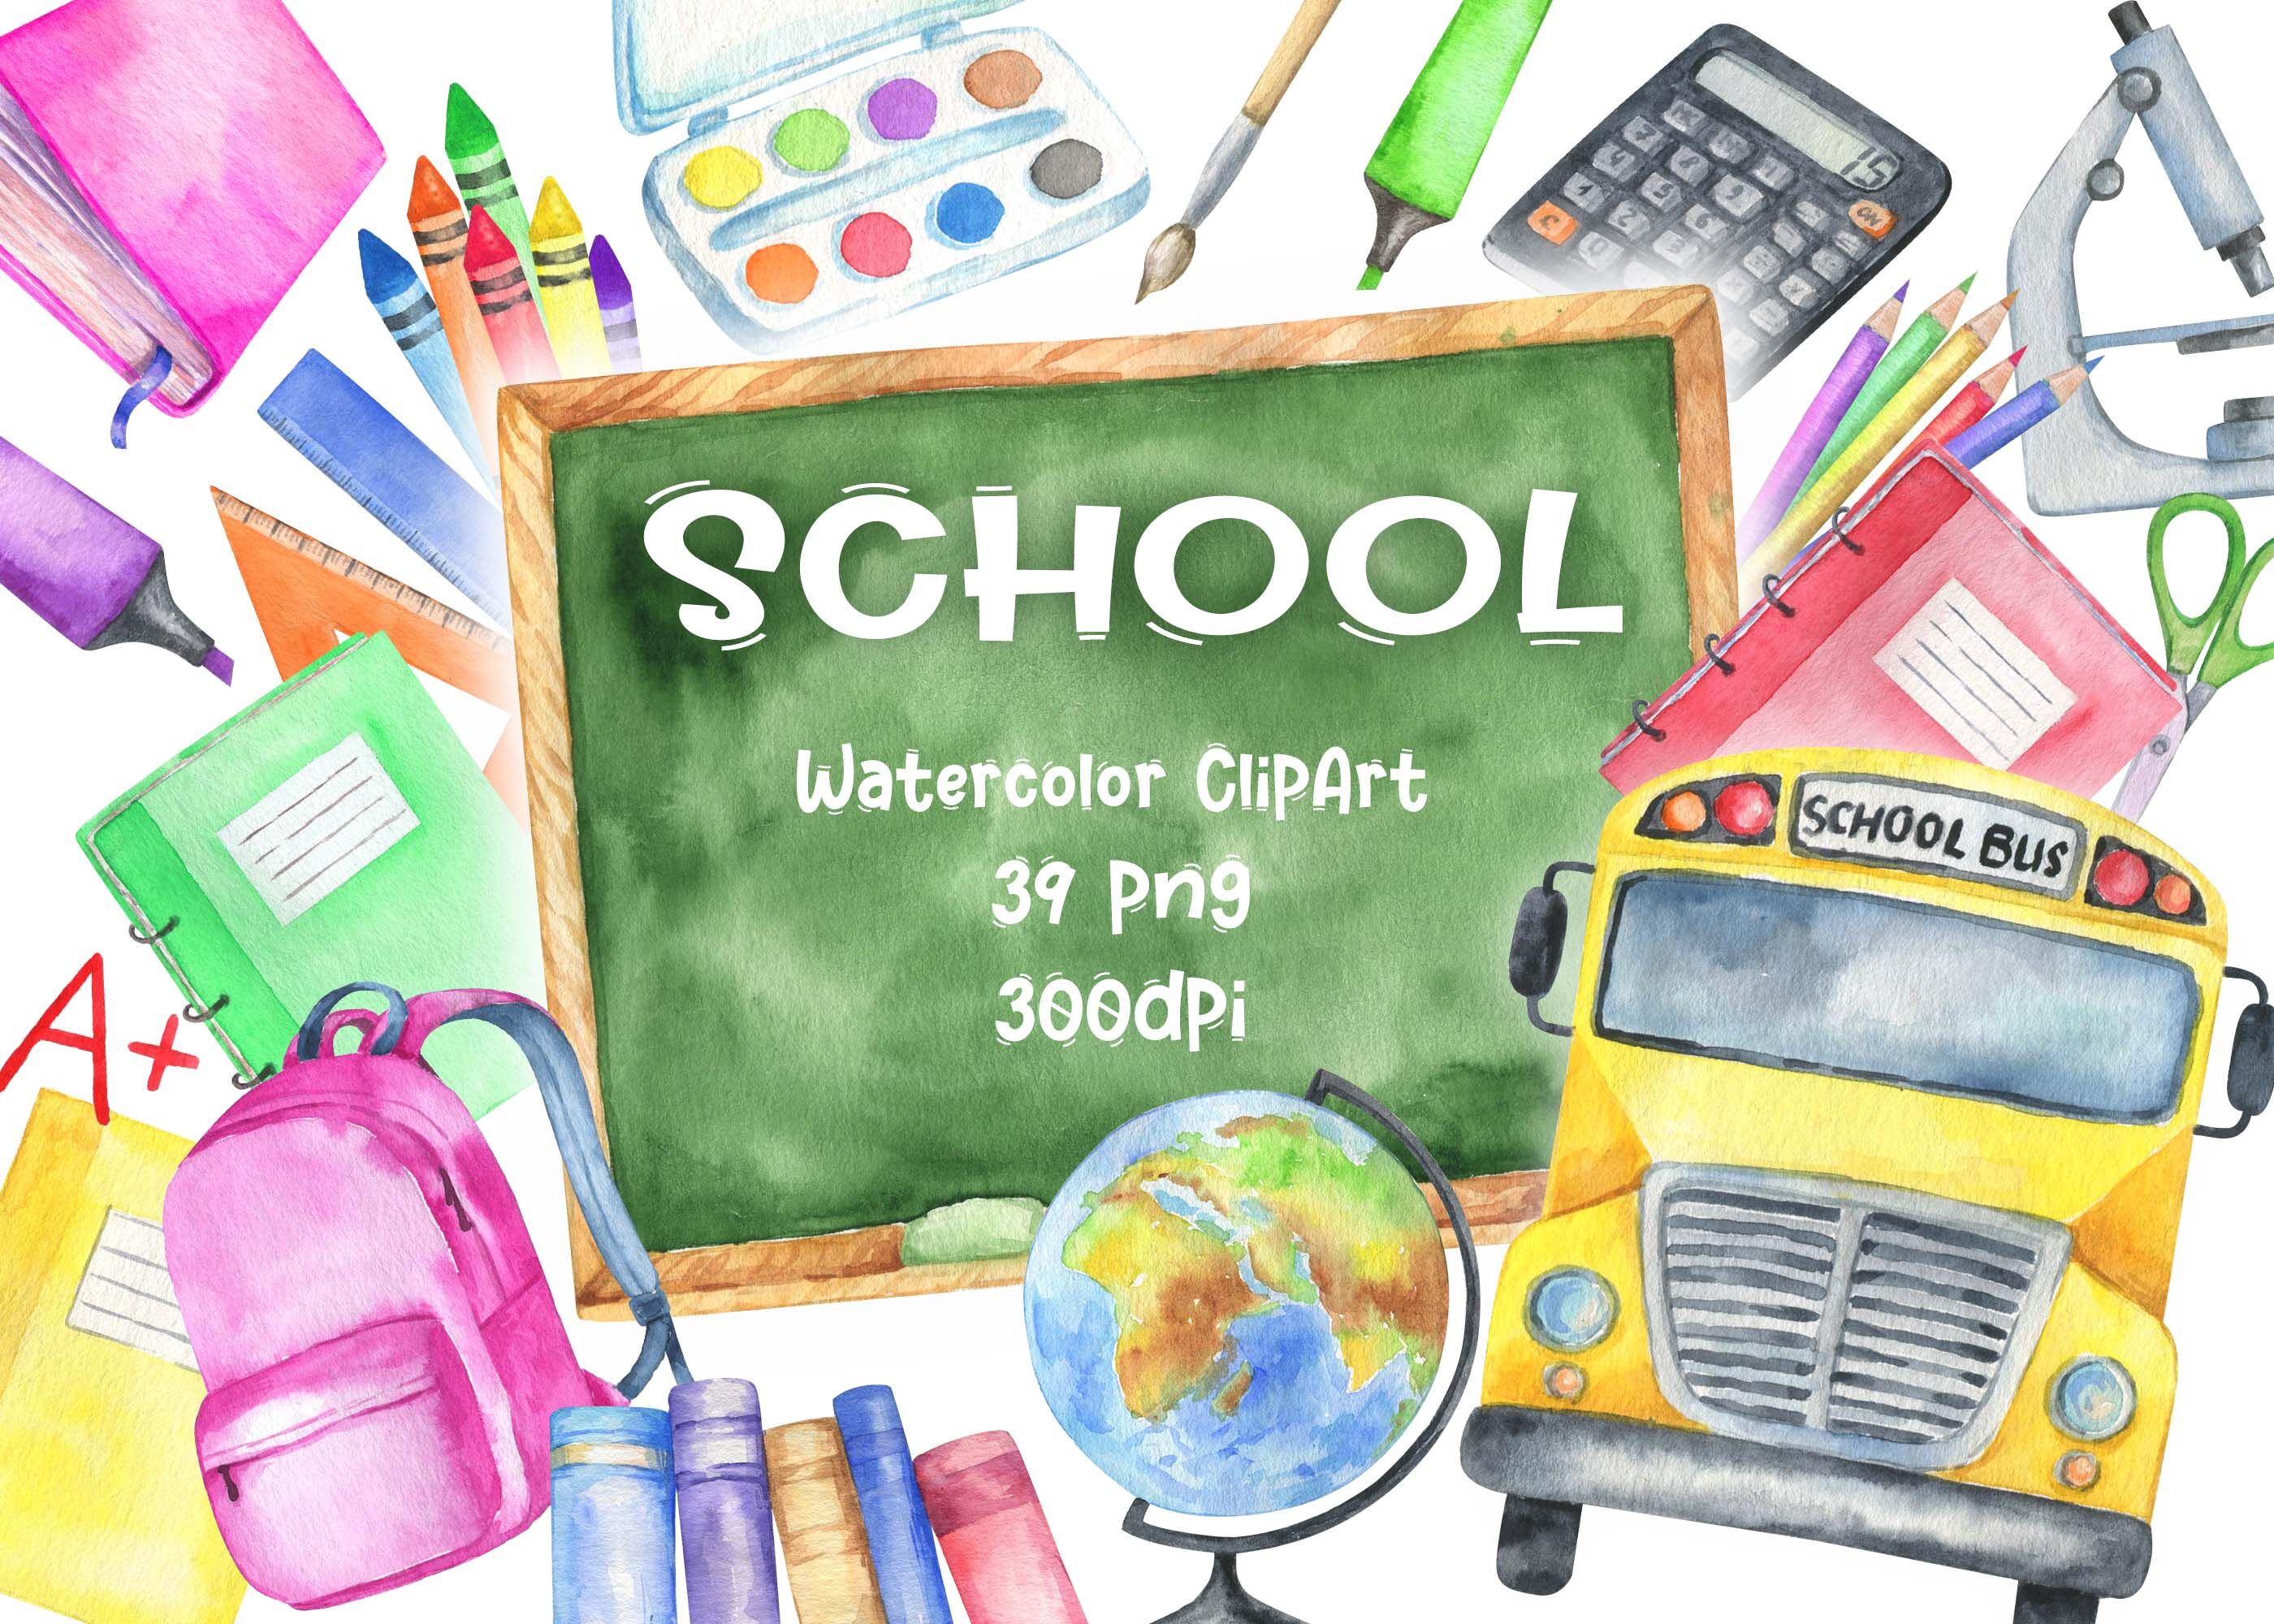 https://media1.thehungryjpeg.com/thumbs2/ori_3984655_79melrvsmaqyaeddk88jw83z599wcfq2w299hx4g_watercolor-school-clipart-school-bus-png-school-supplies-clip-art-inst.jpg